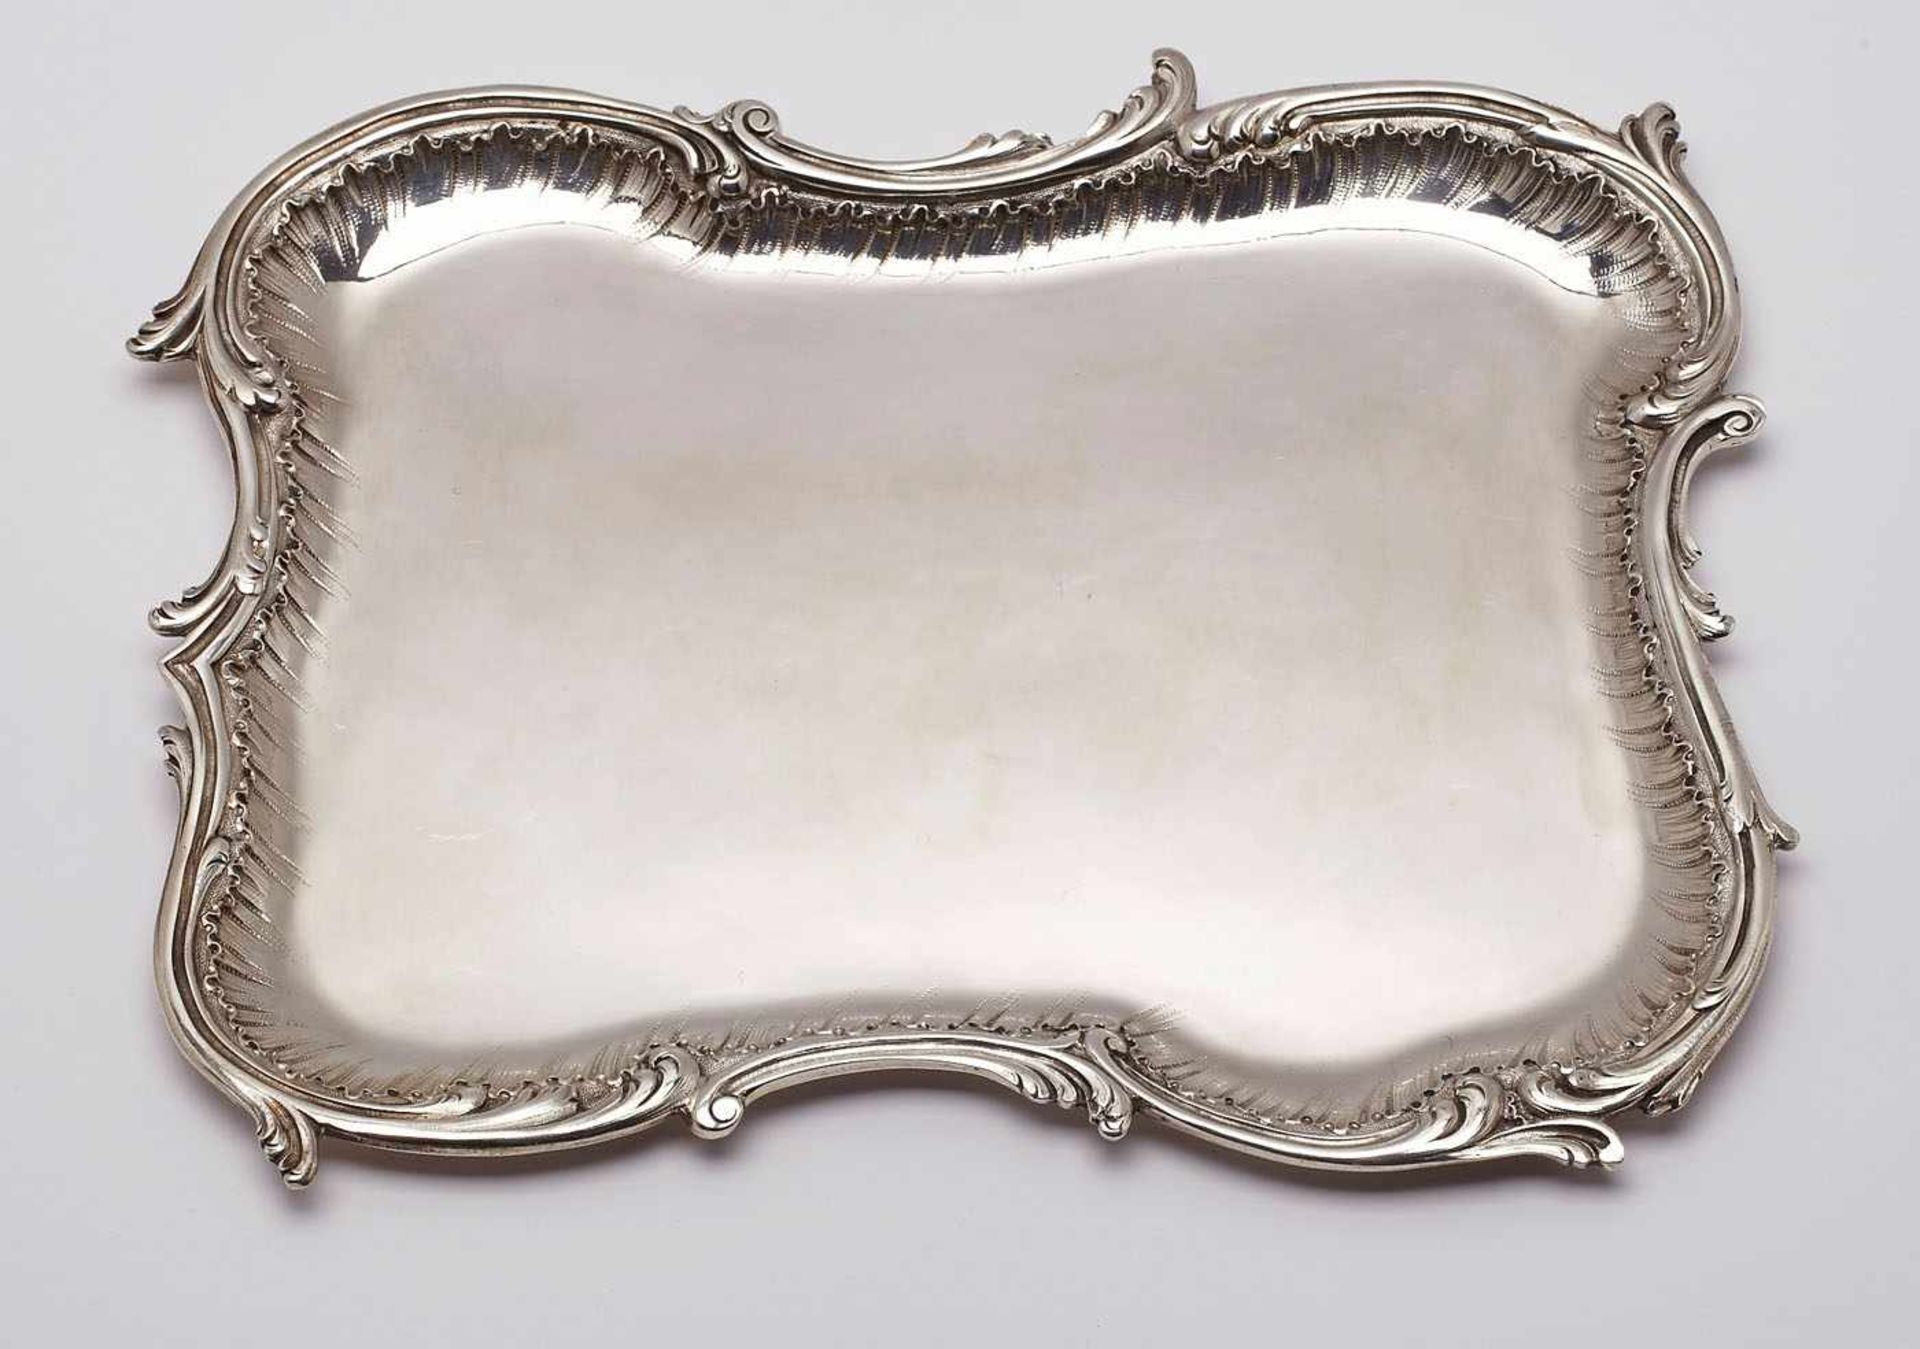 Kl. Tablett, Rokoko-Stil, Paris um 1900. 950er Silber. Beschau Frankr., Meister-/ Händler- marke "M.